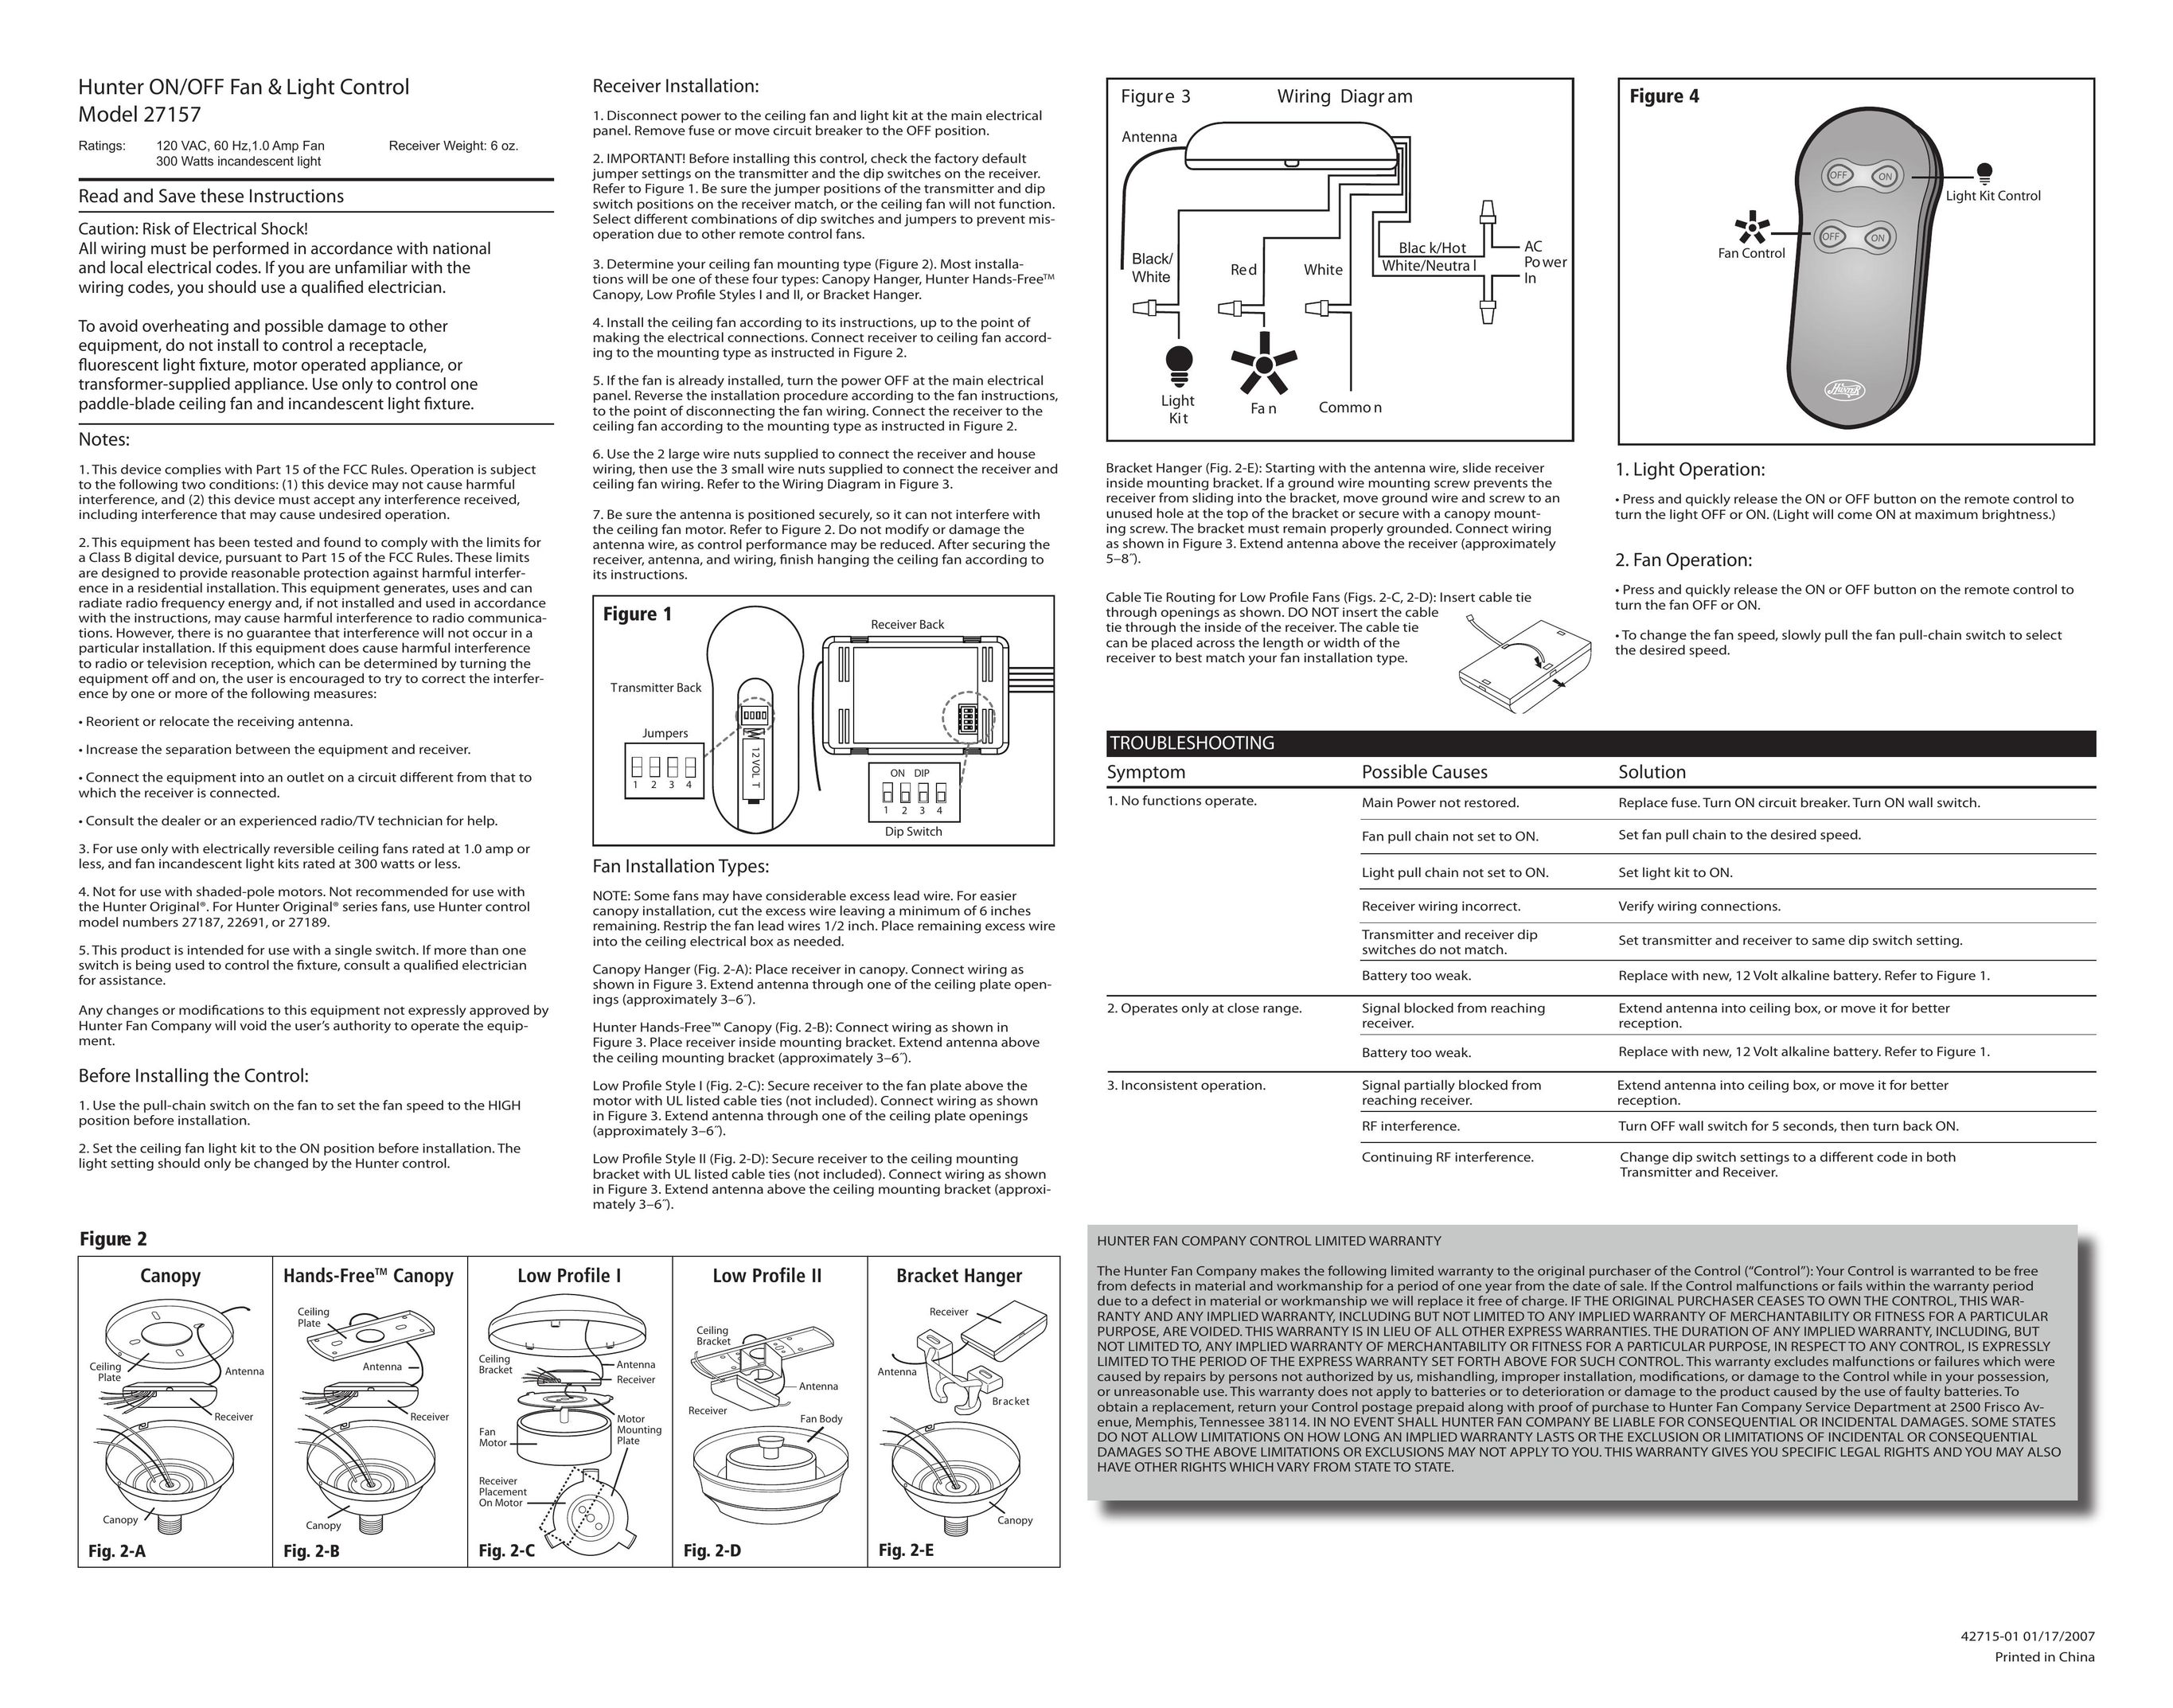 Hunter Fan 27157 Universal Remote User Manual